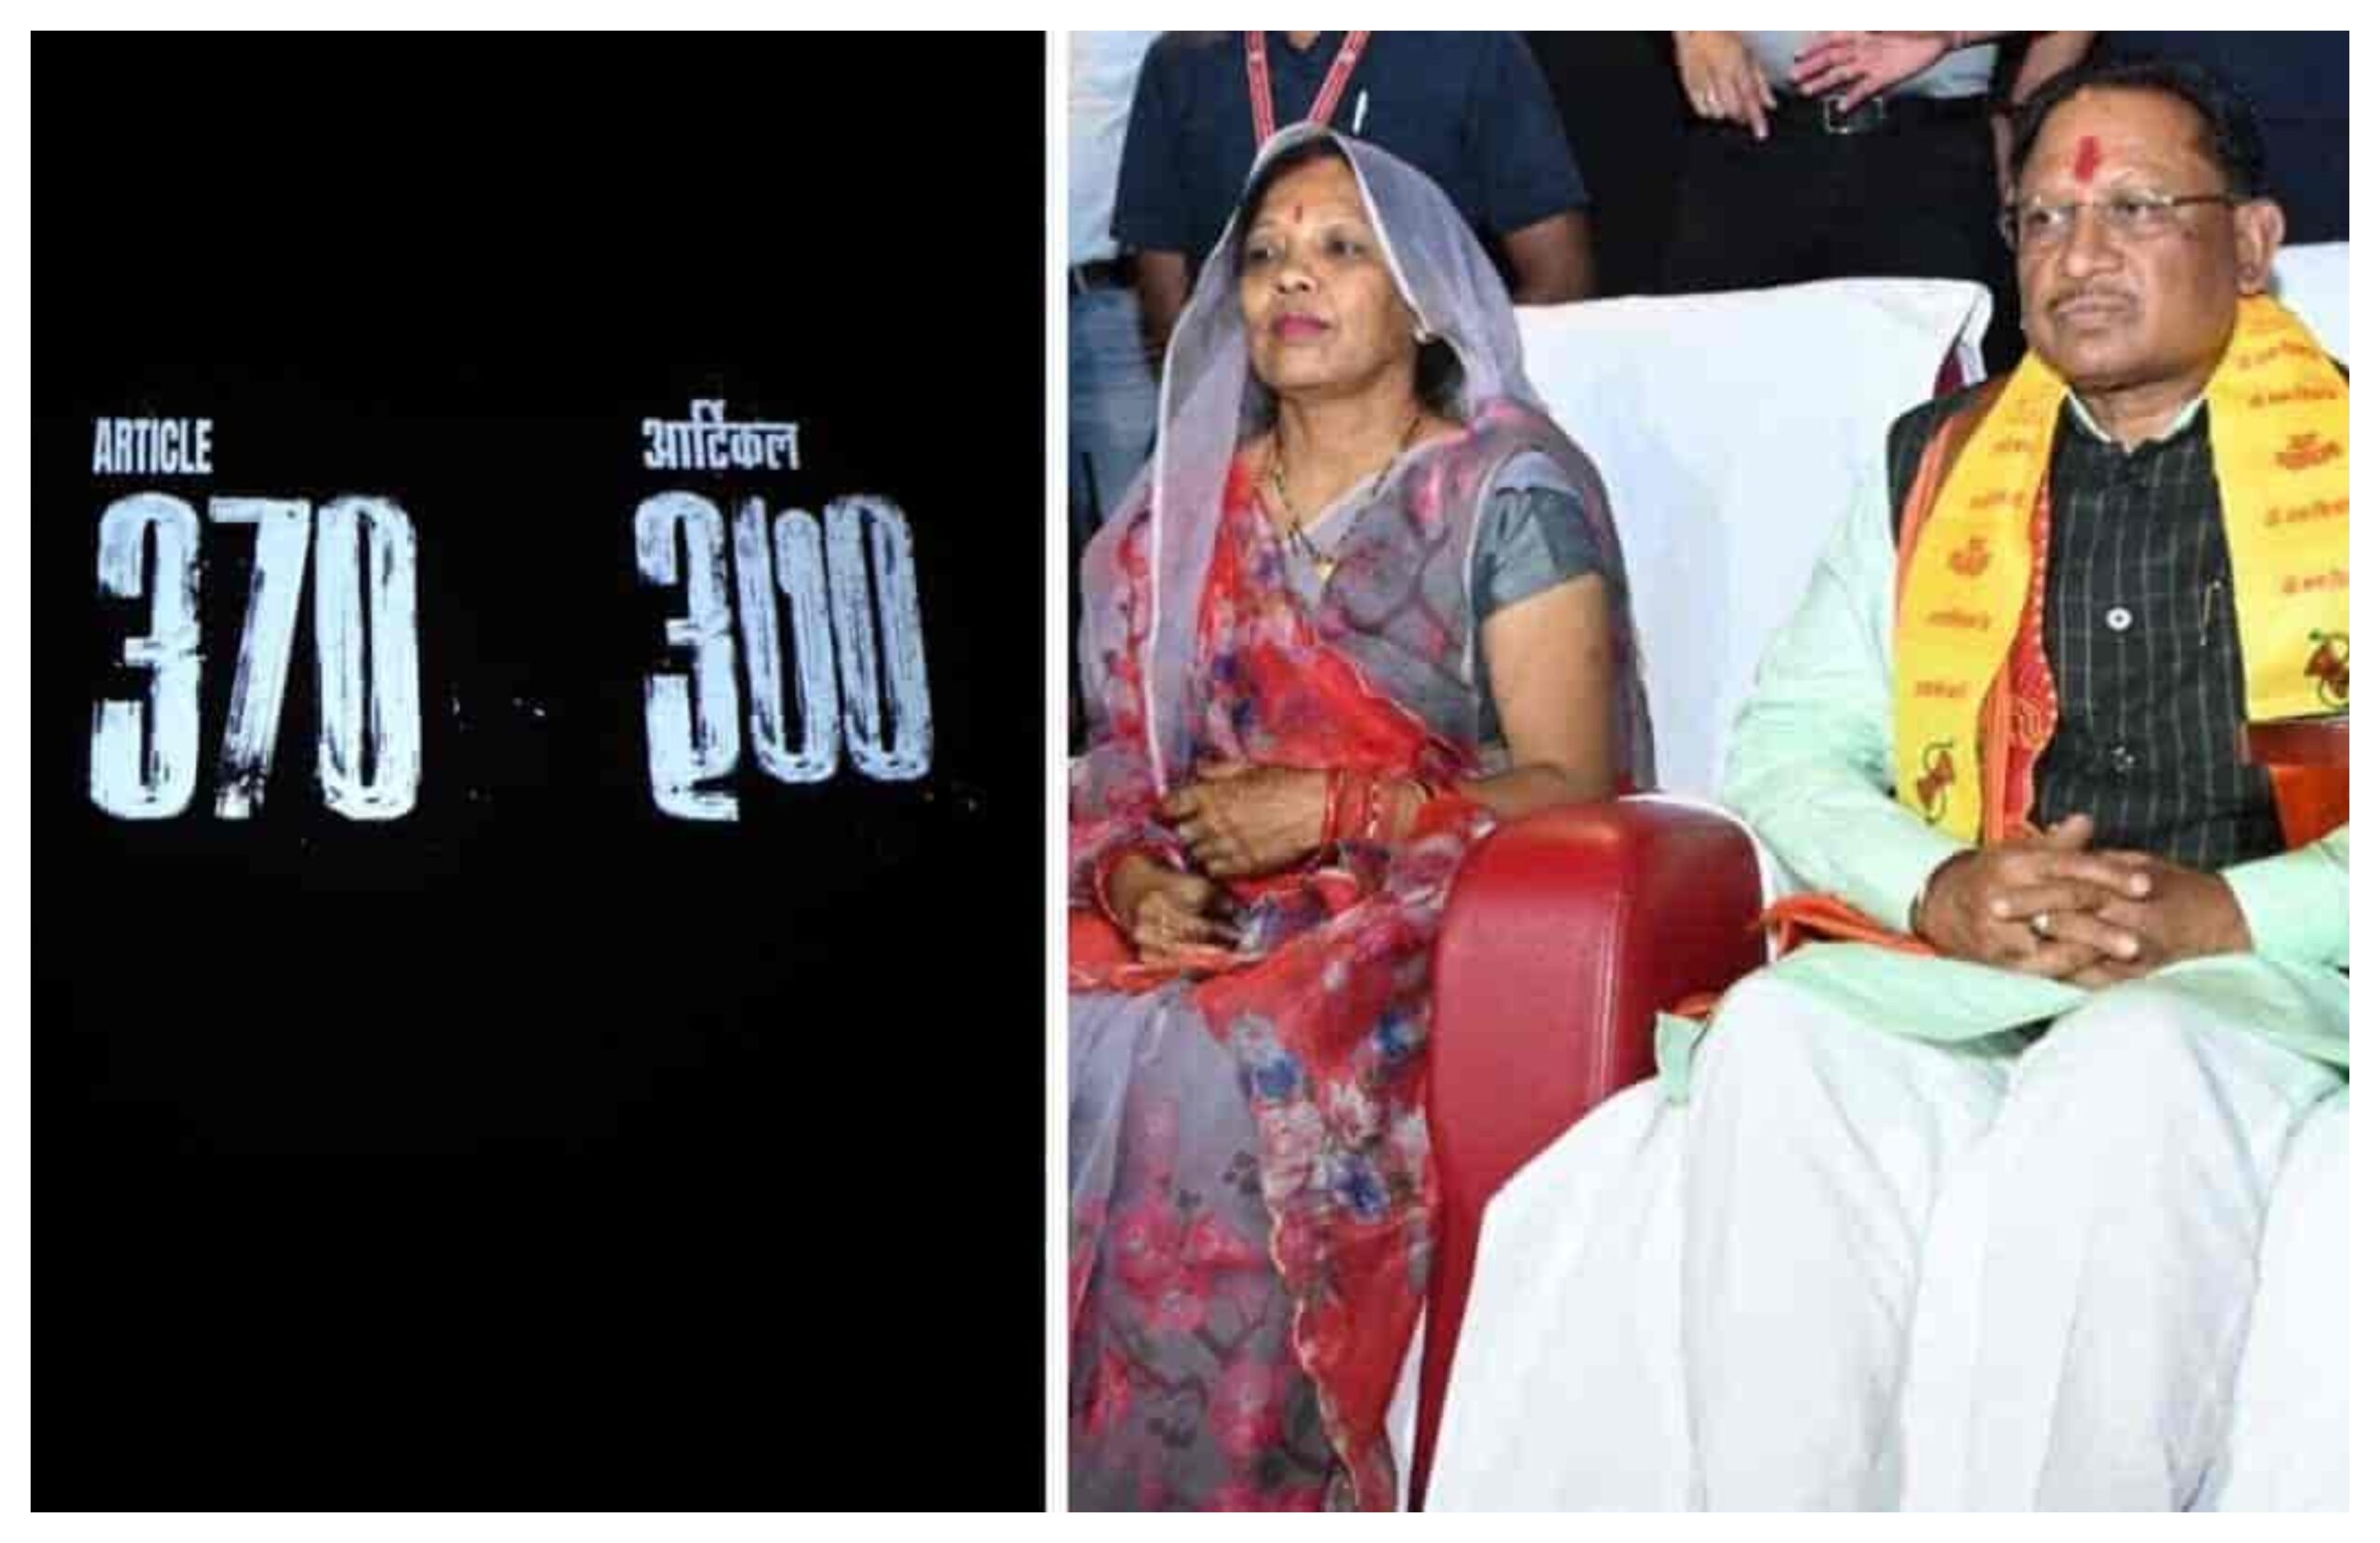 Film 'Article 370' tax free in Chhattisgarh, CM Vishnudev Sai announced after watching the film